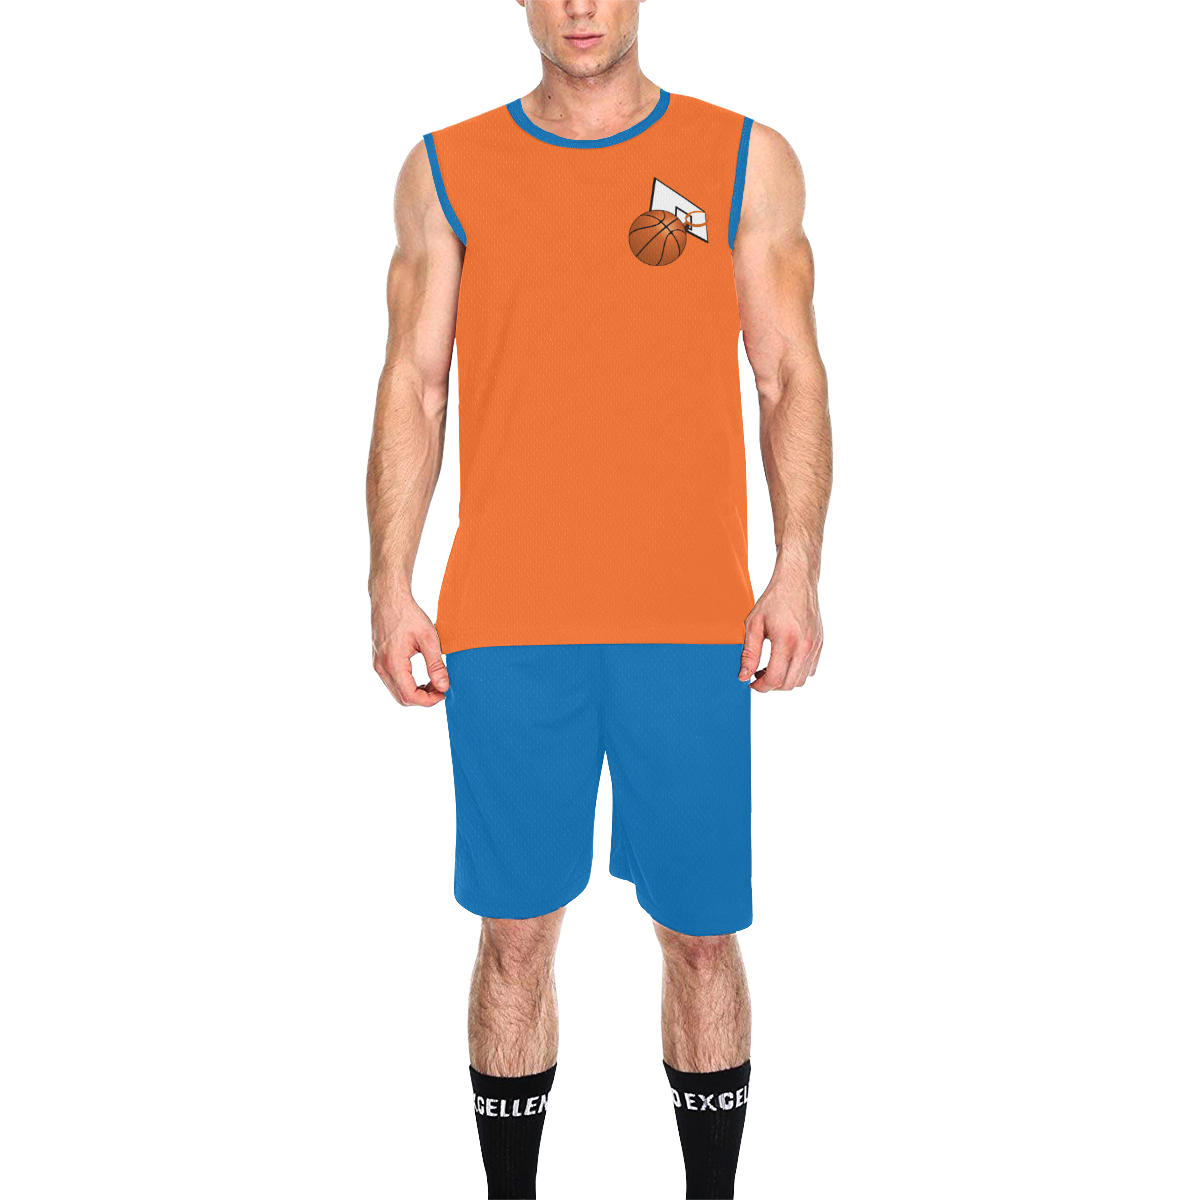 Basketball And Basketball Hoop Cyan Blue and Orange All Over Print Basketball Uniform